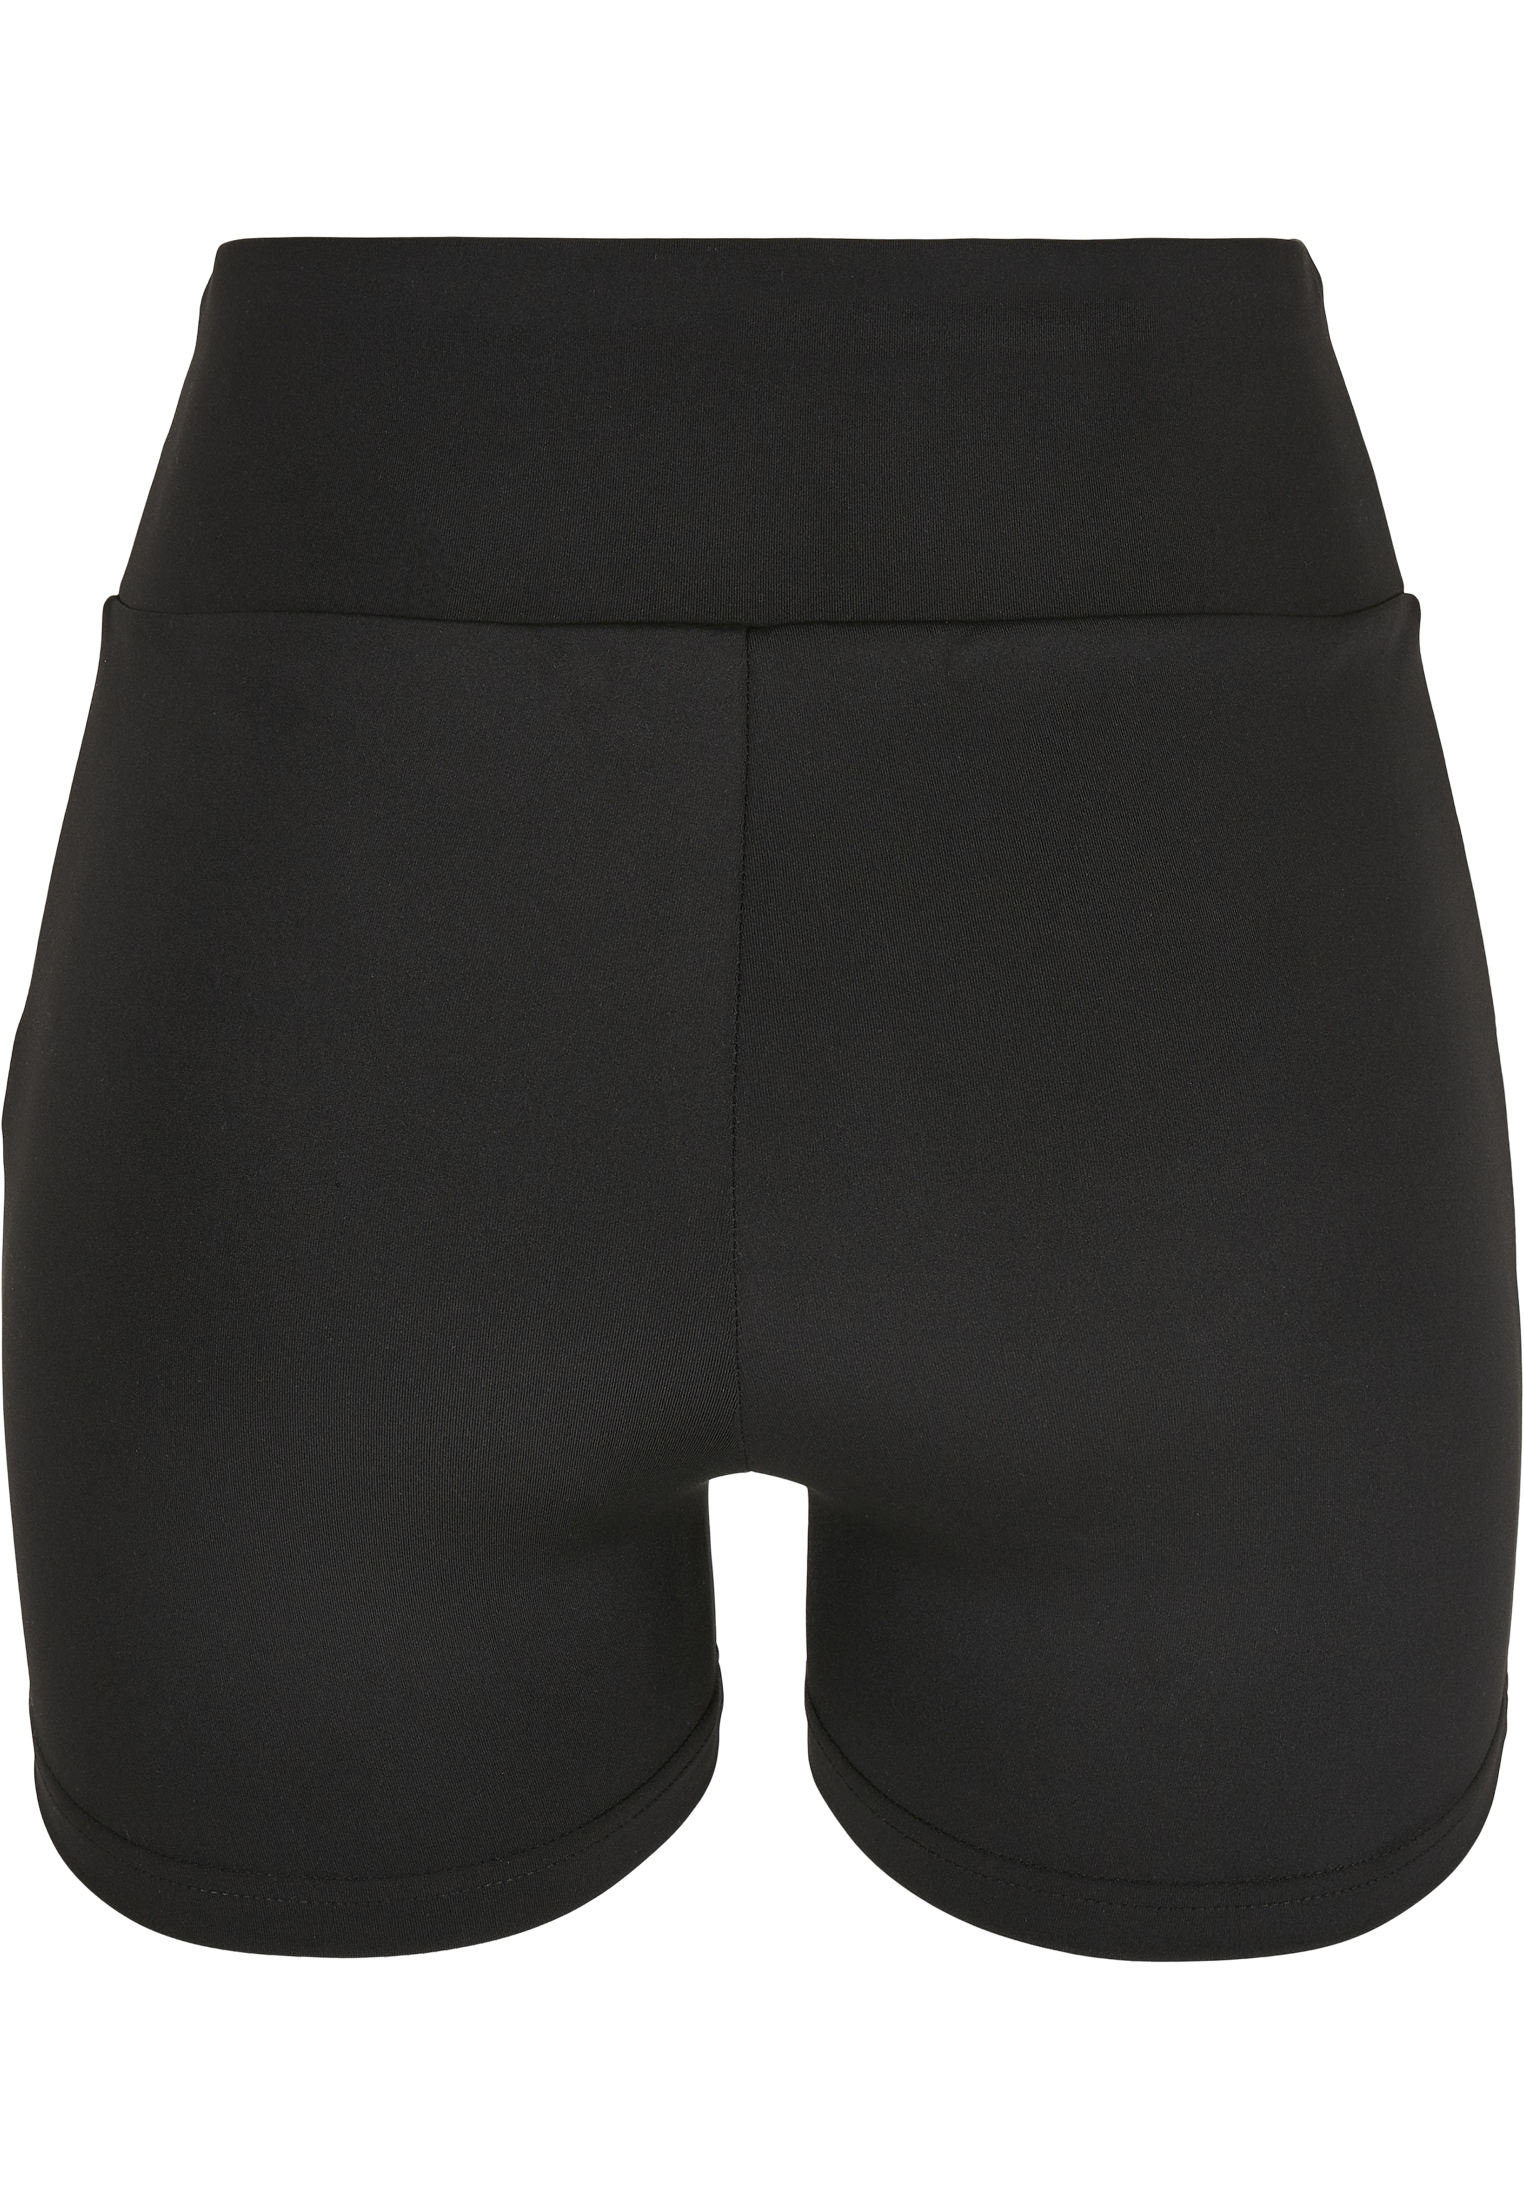 URBAN CLASSICS Stoffhose »Damen Ladies Short Pants«, tlg.) Hot Waist kaufen | BAUR High Cycle (1